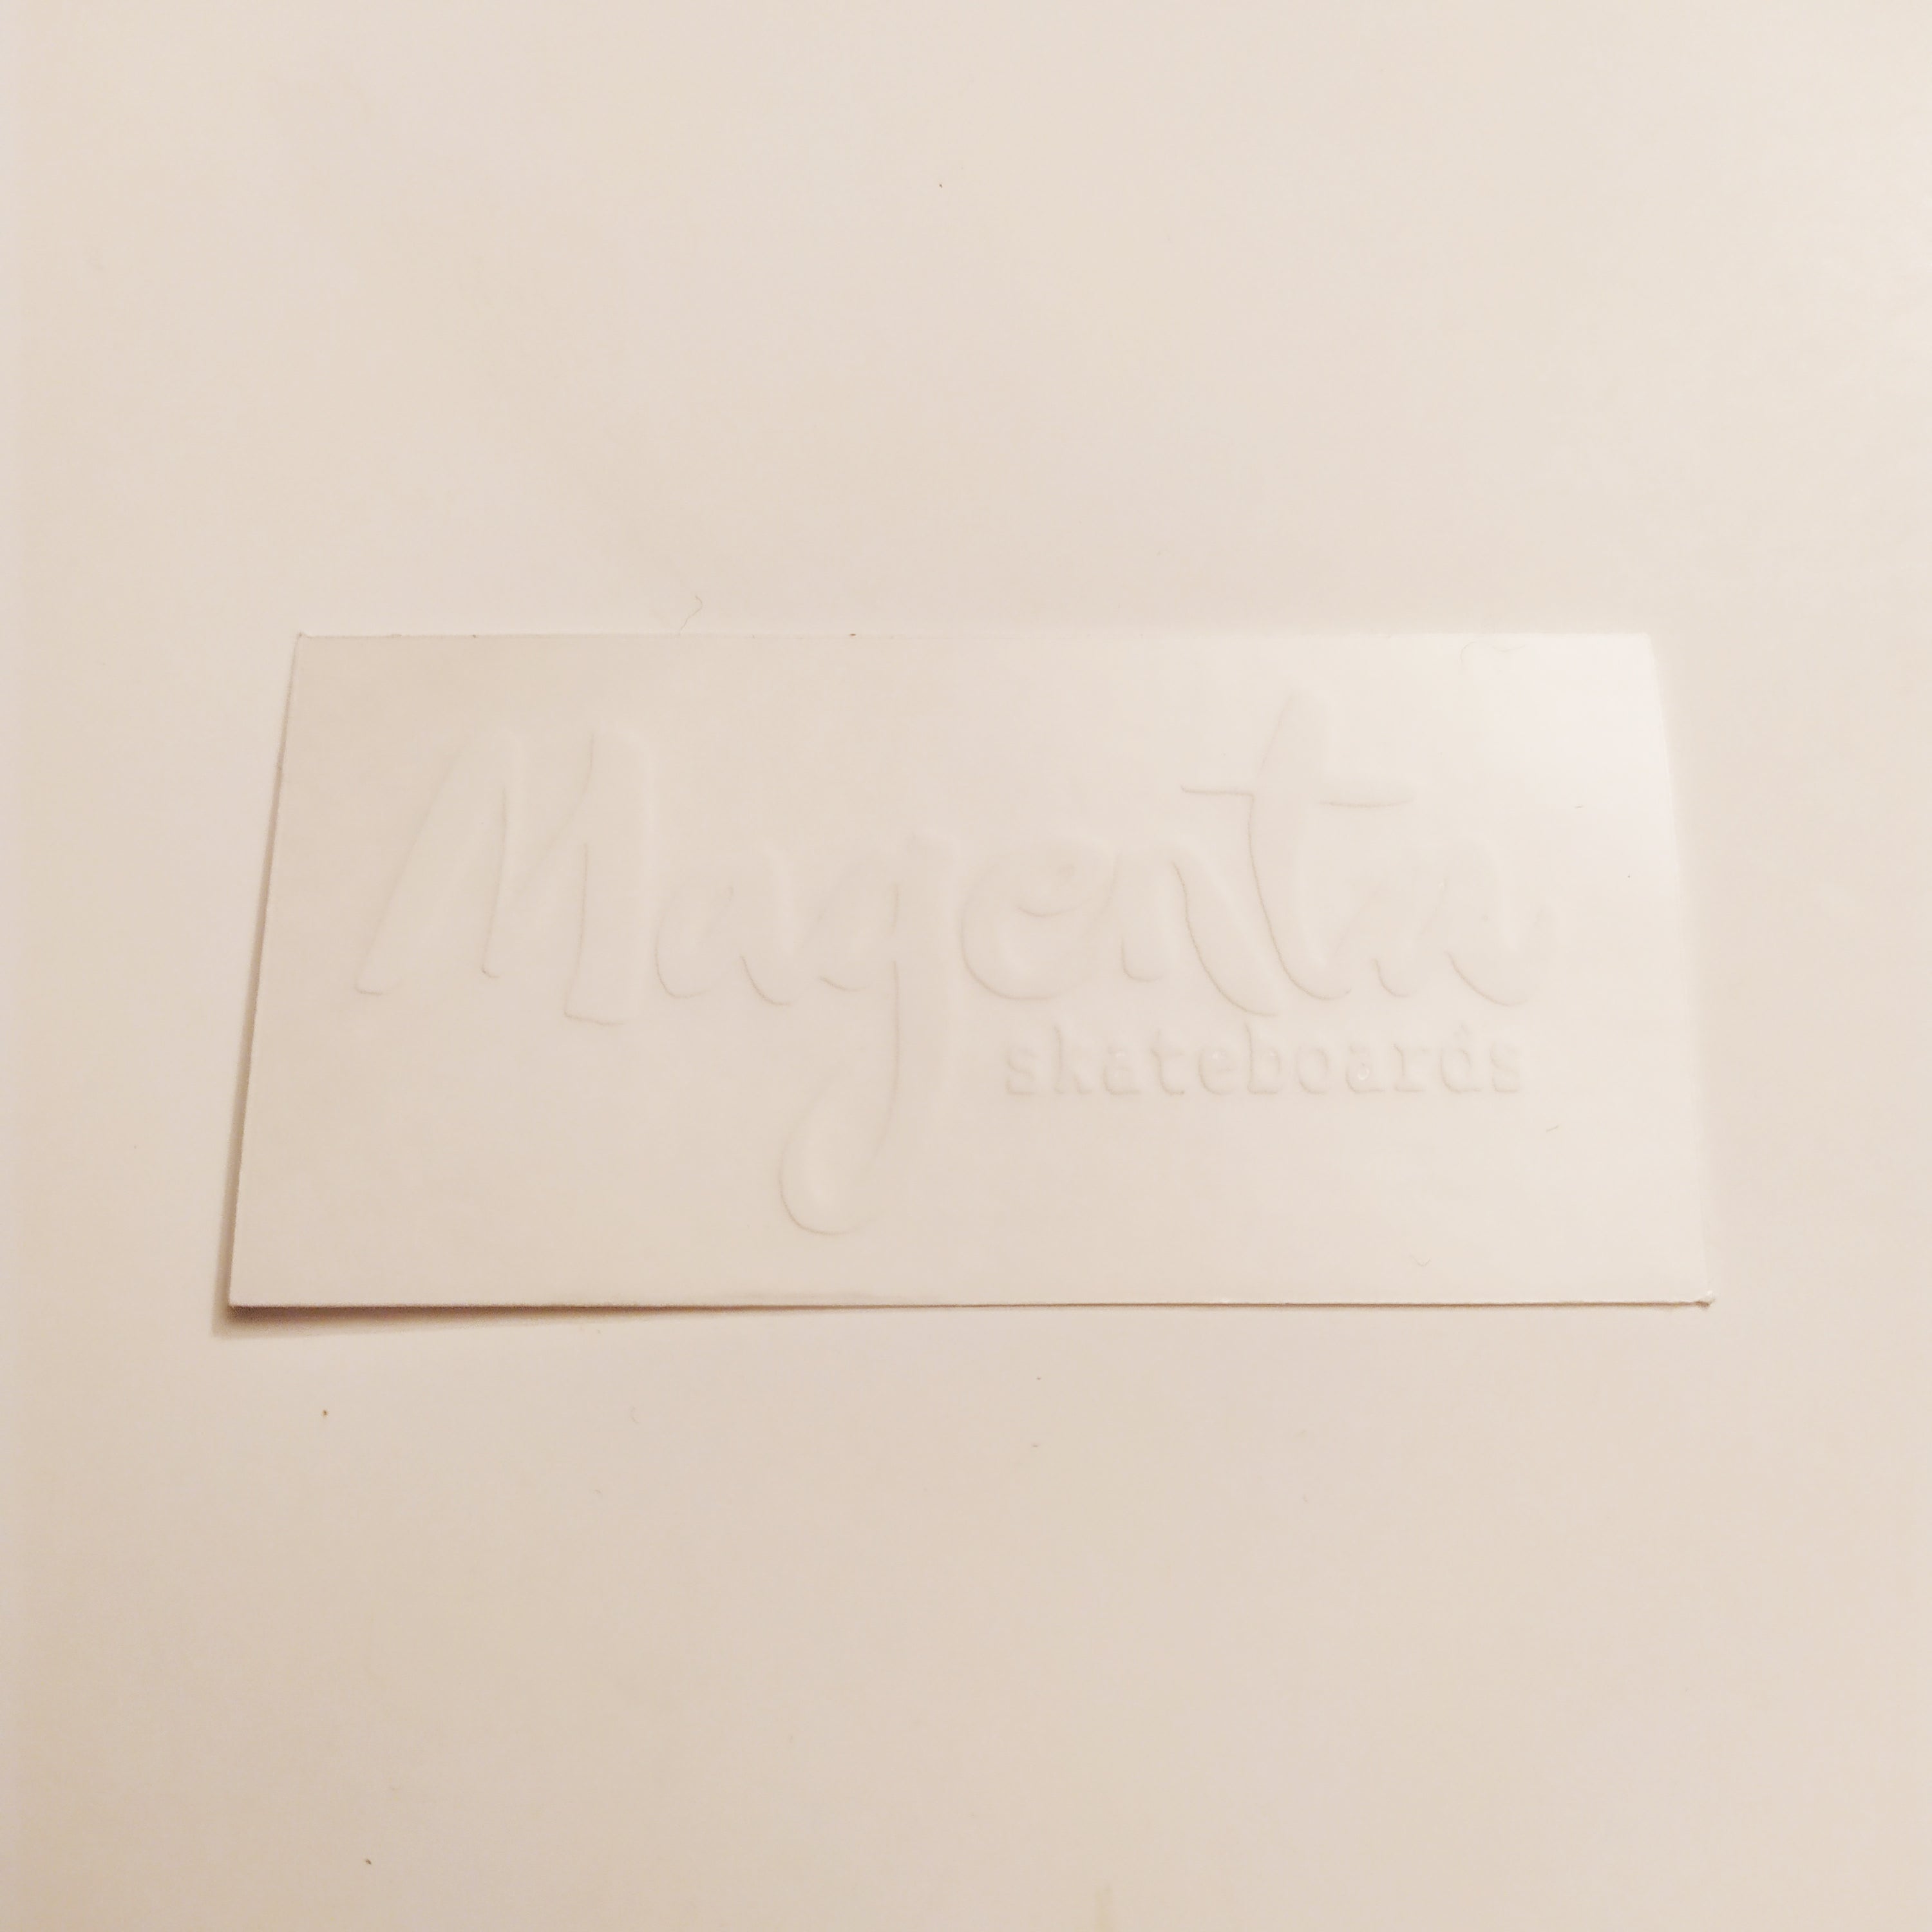 Magenta Skateboard Sticker - 6.5cm across approx - SkateboardStickers.com